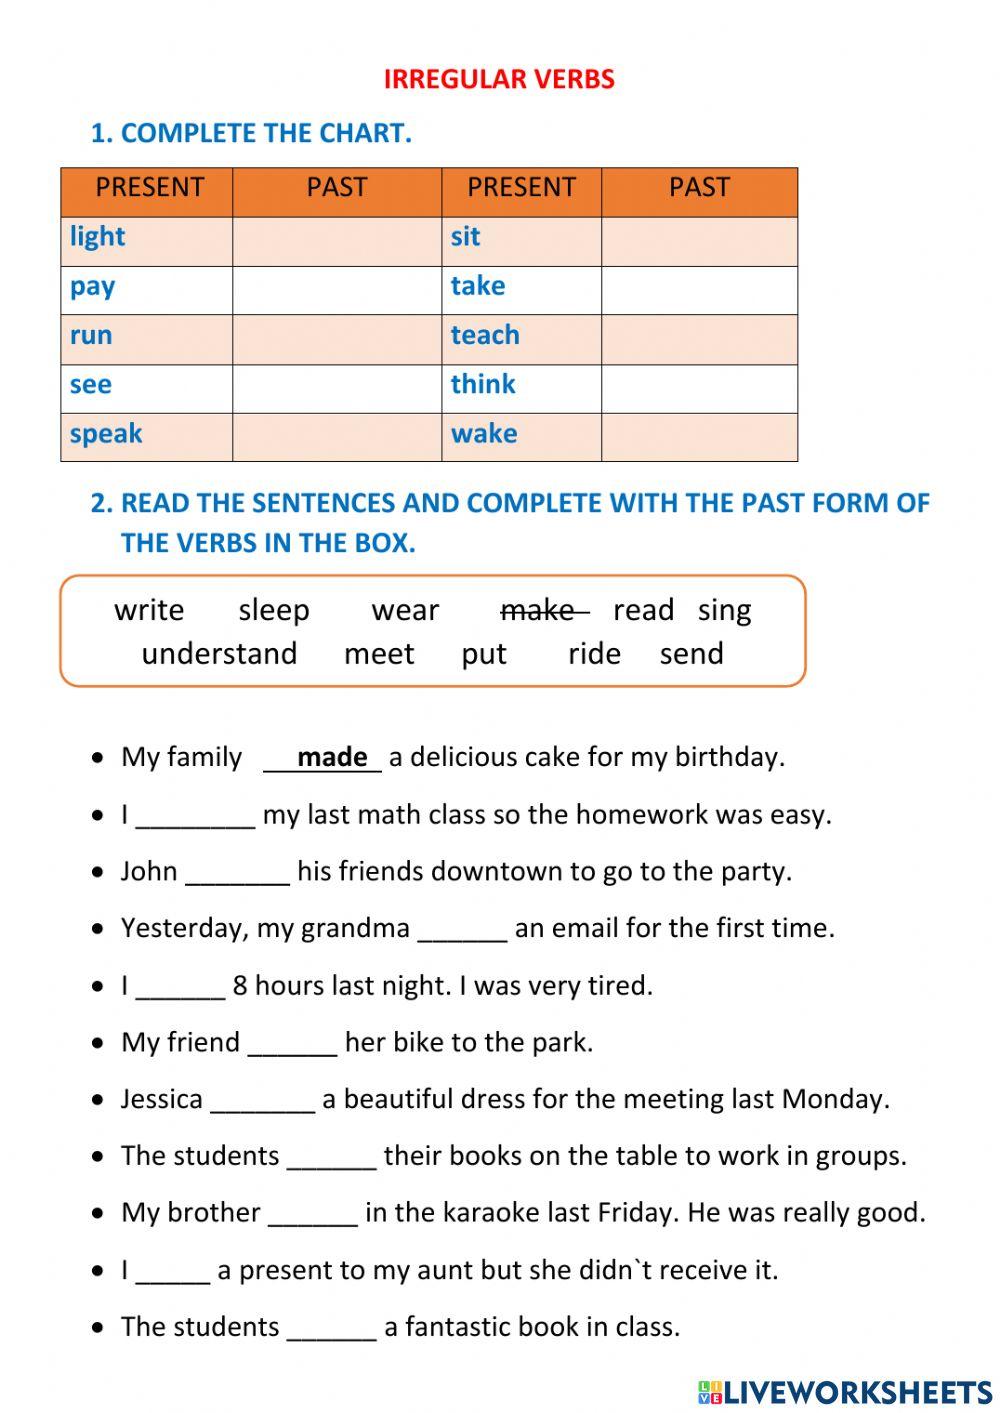 Irregular verbs lesson